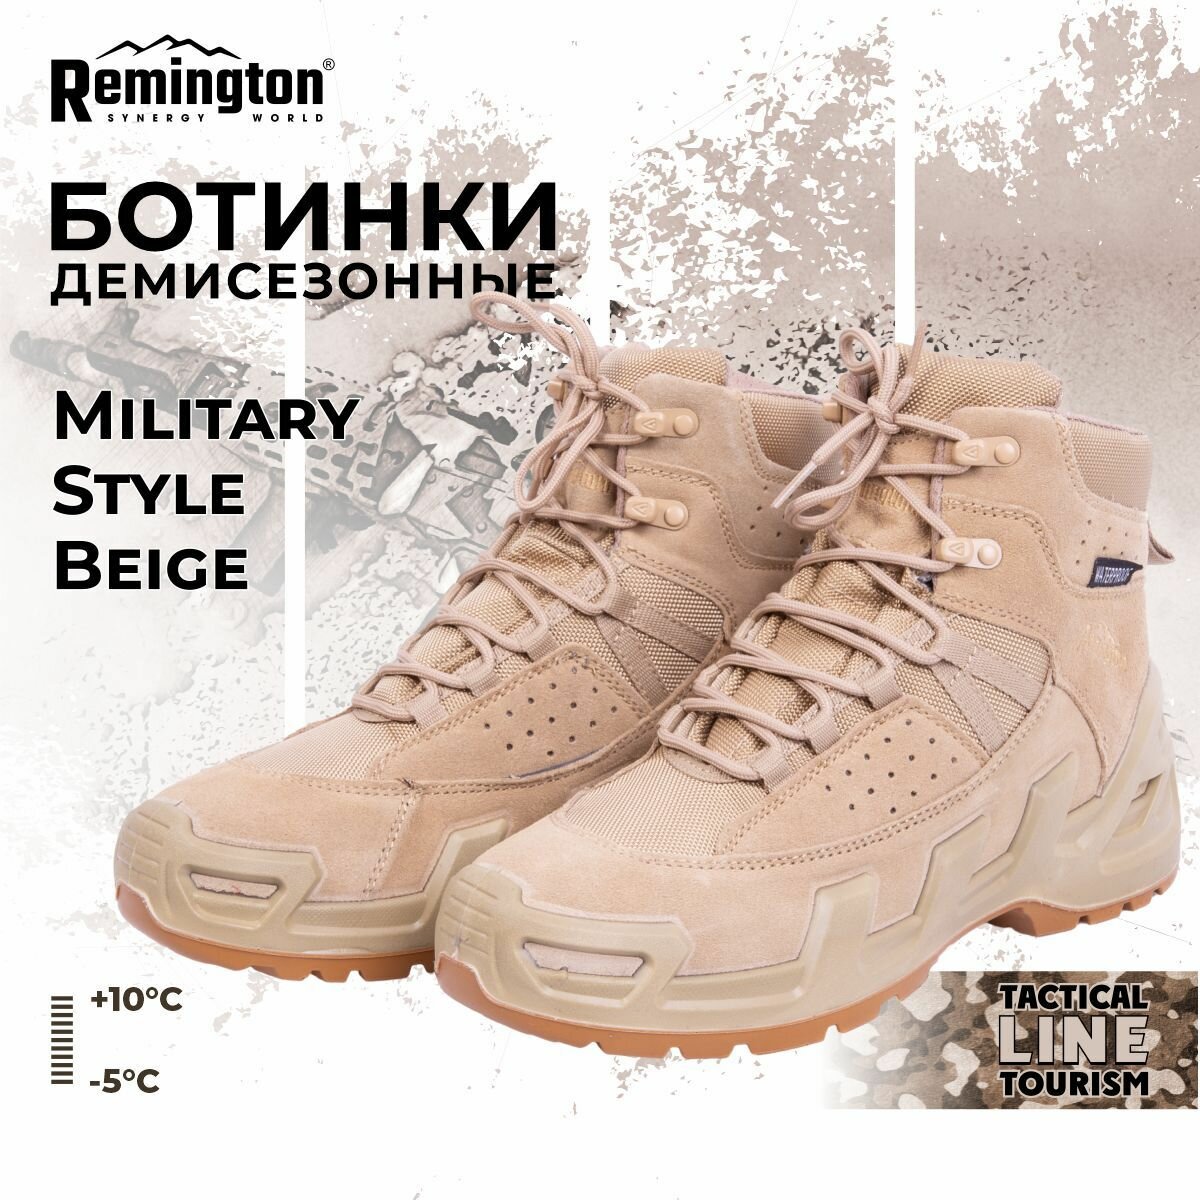 Ботинки Remington Boots Military Style Beige р. 42 RB4437-022